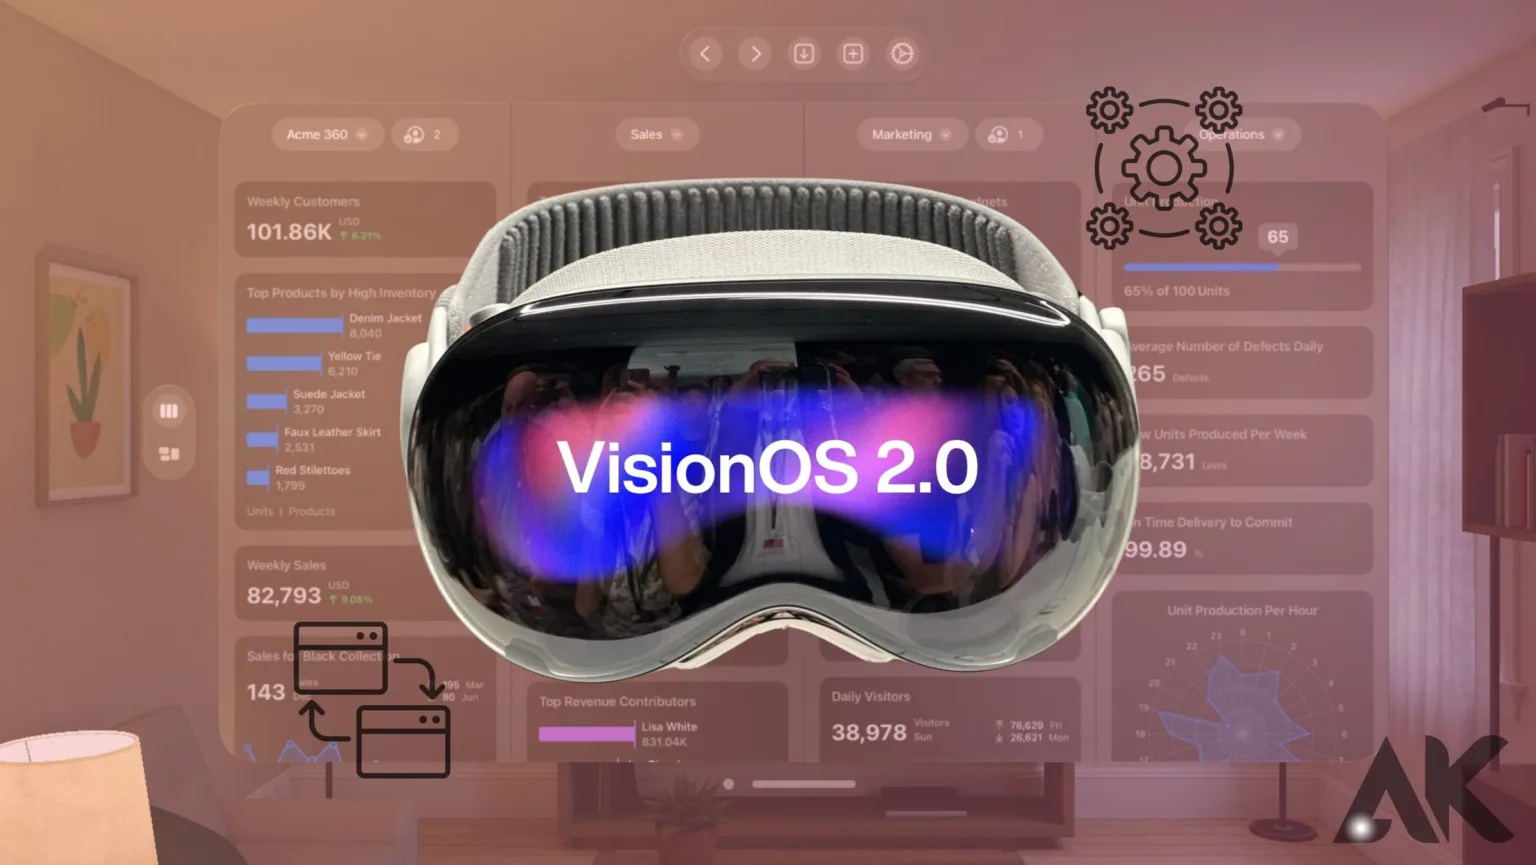 VisionOS2.0 support